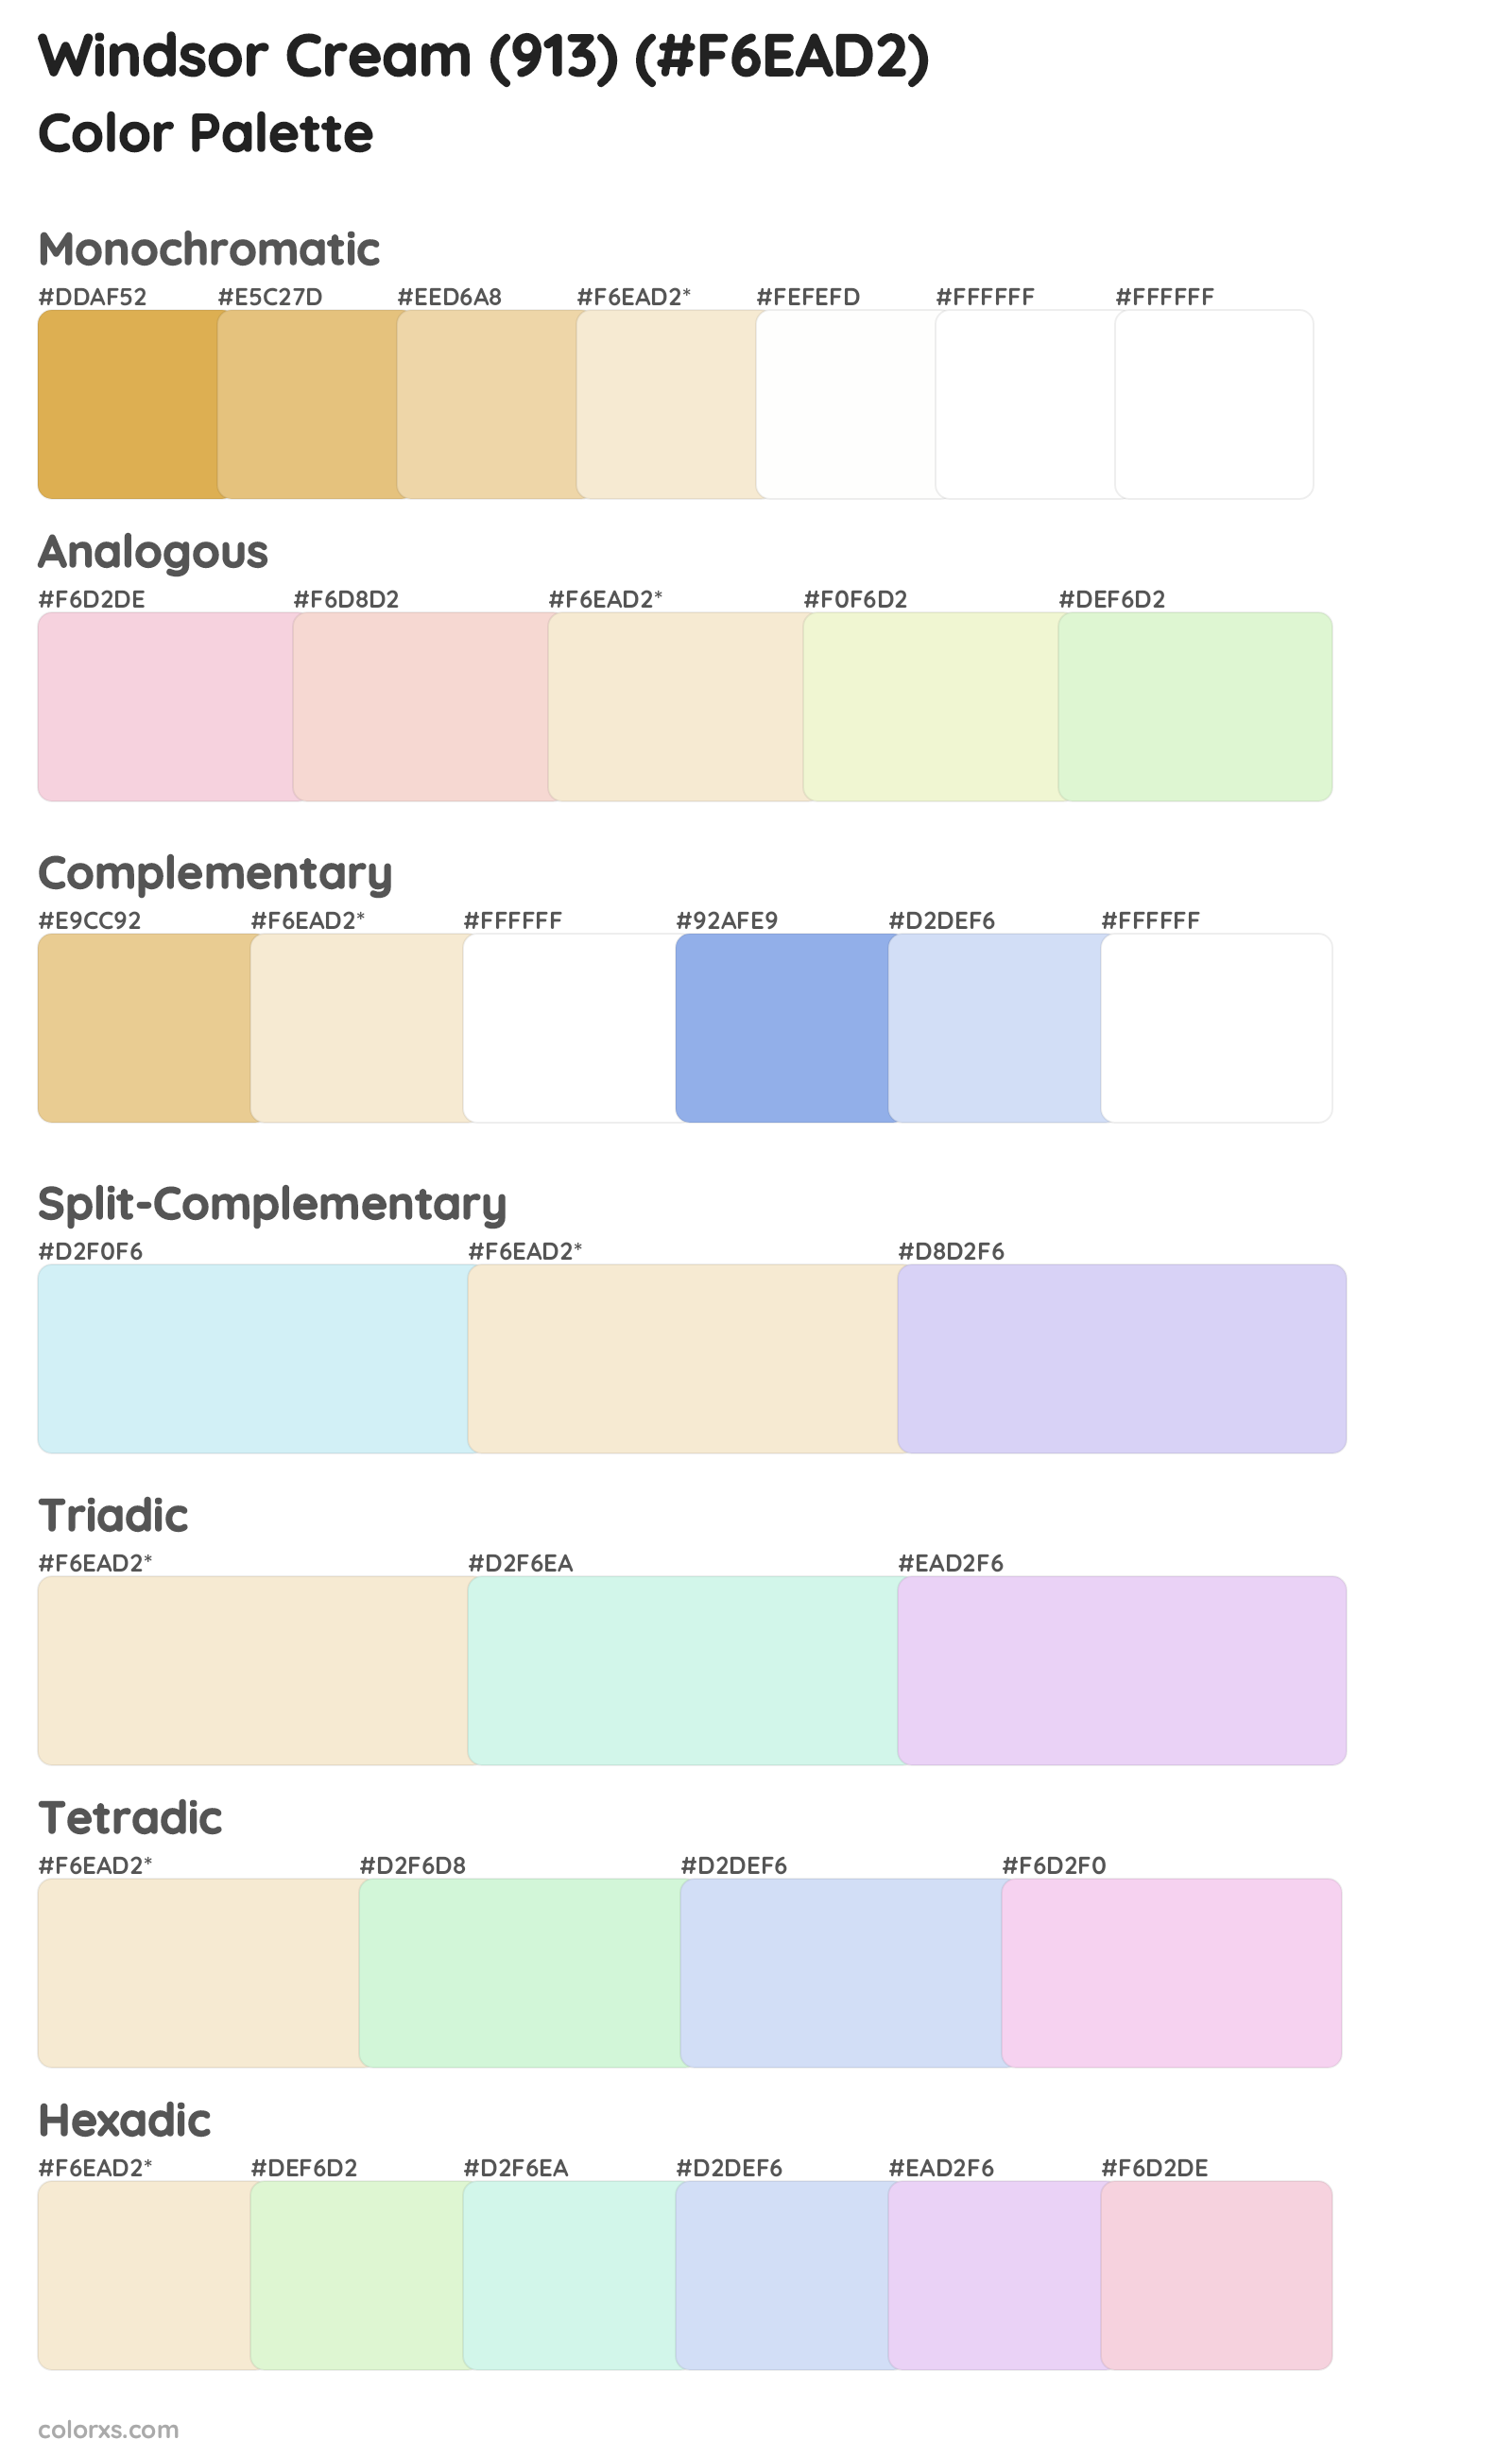 Windsor Cream (913) Color Scheme Palettes